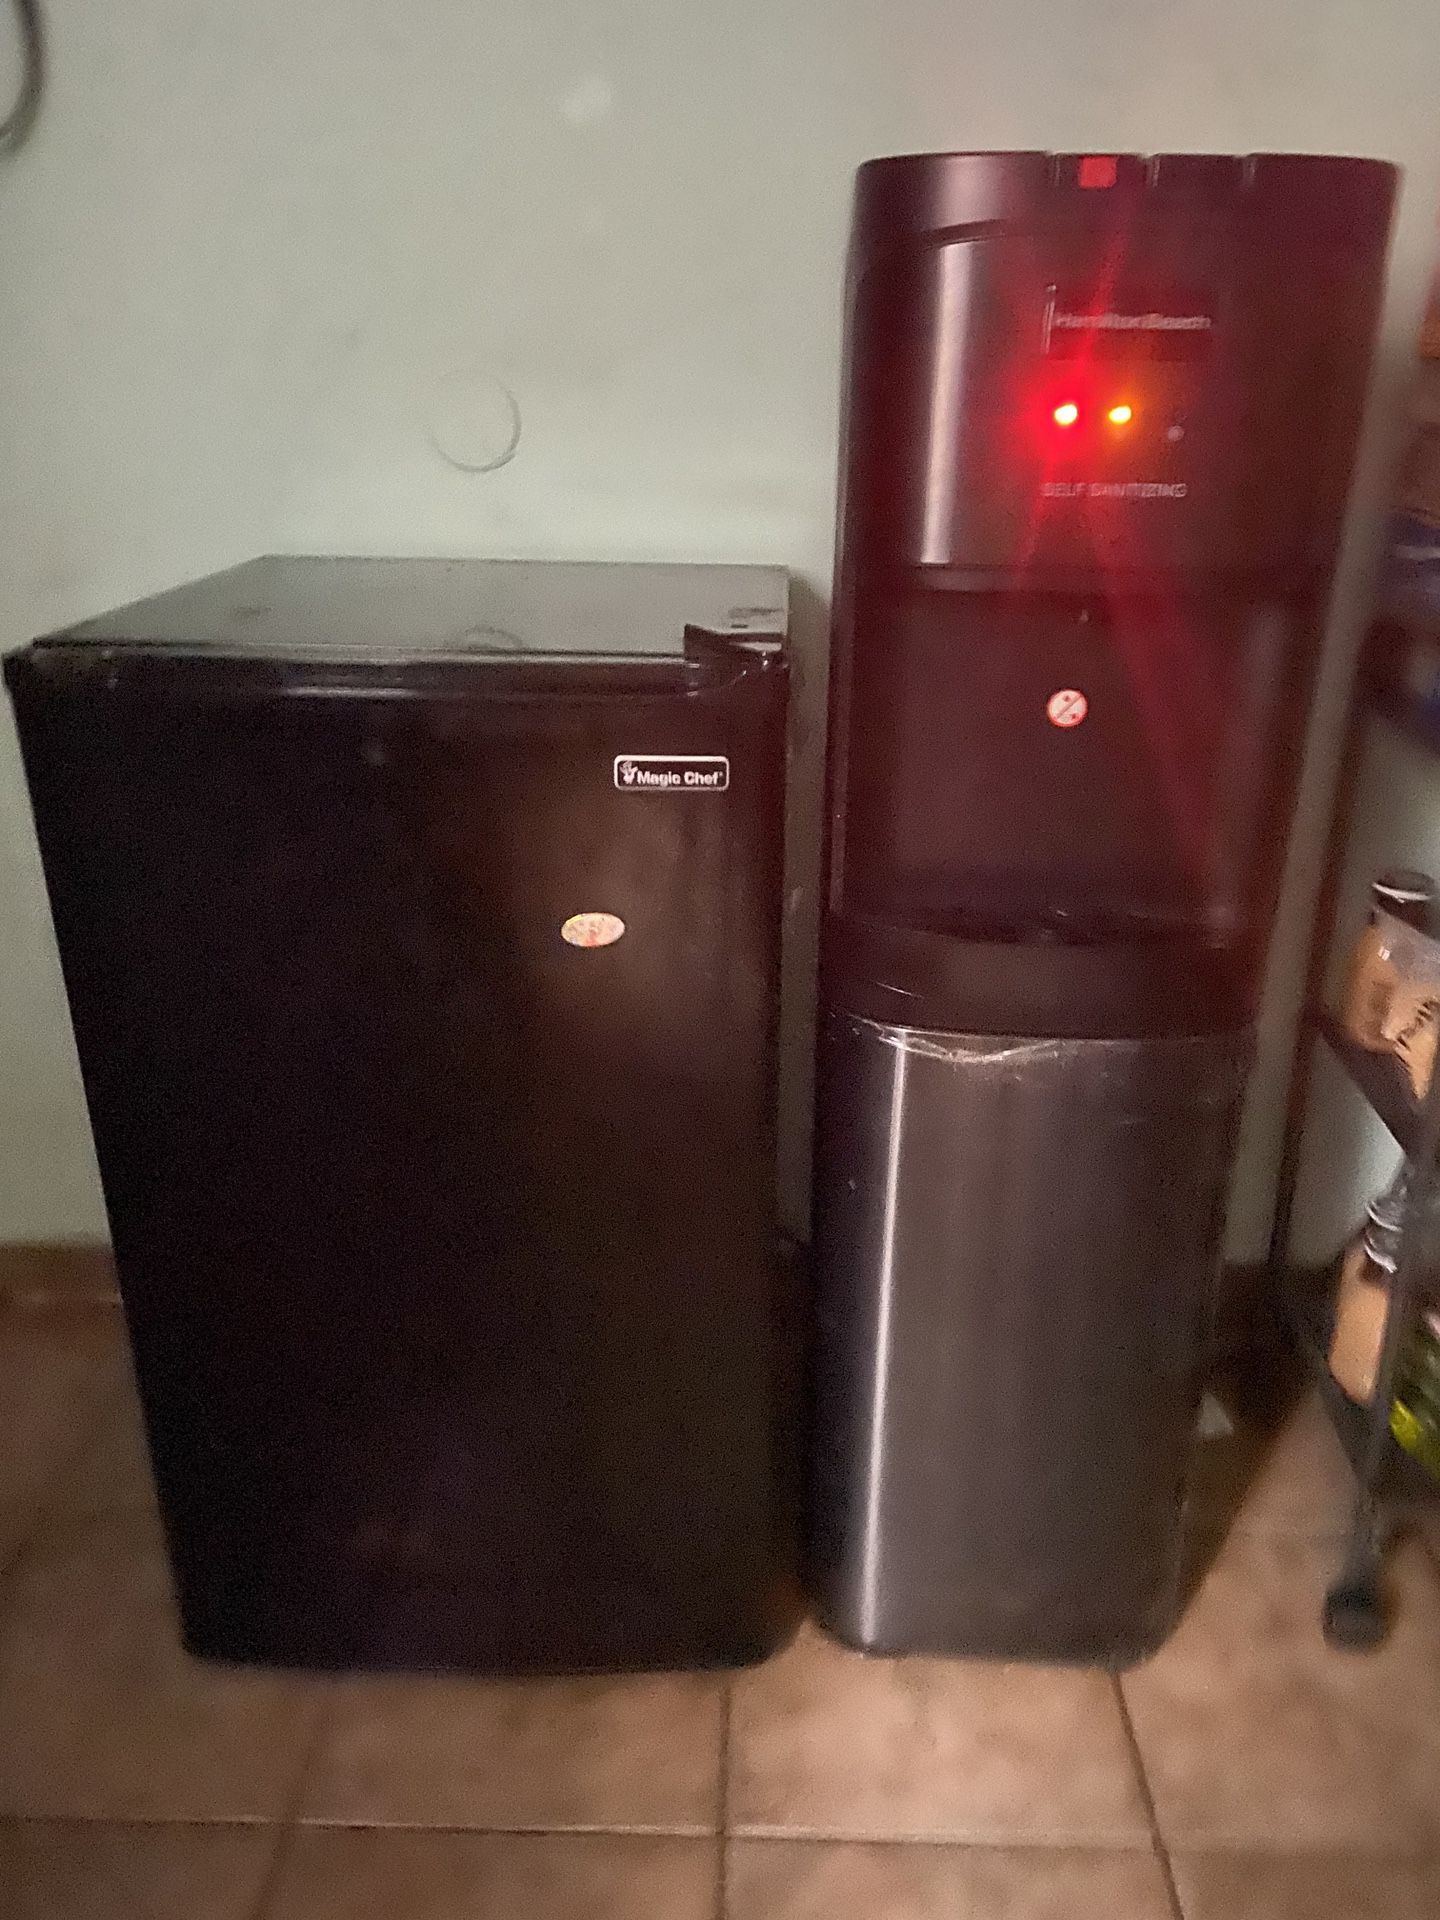 Mini fridge and water dispenser